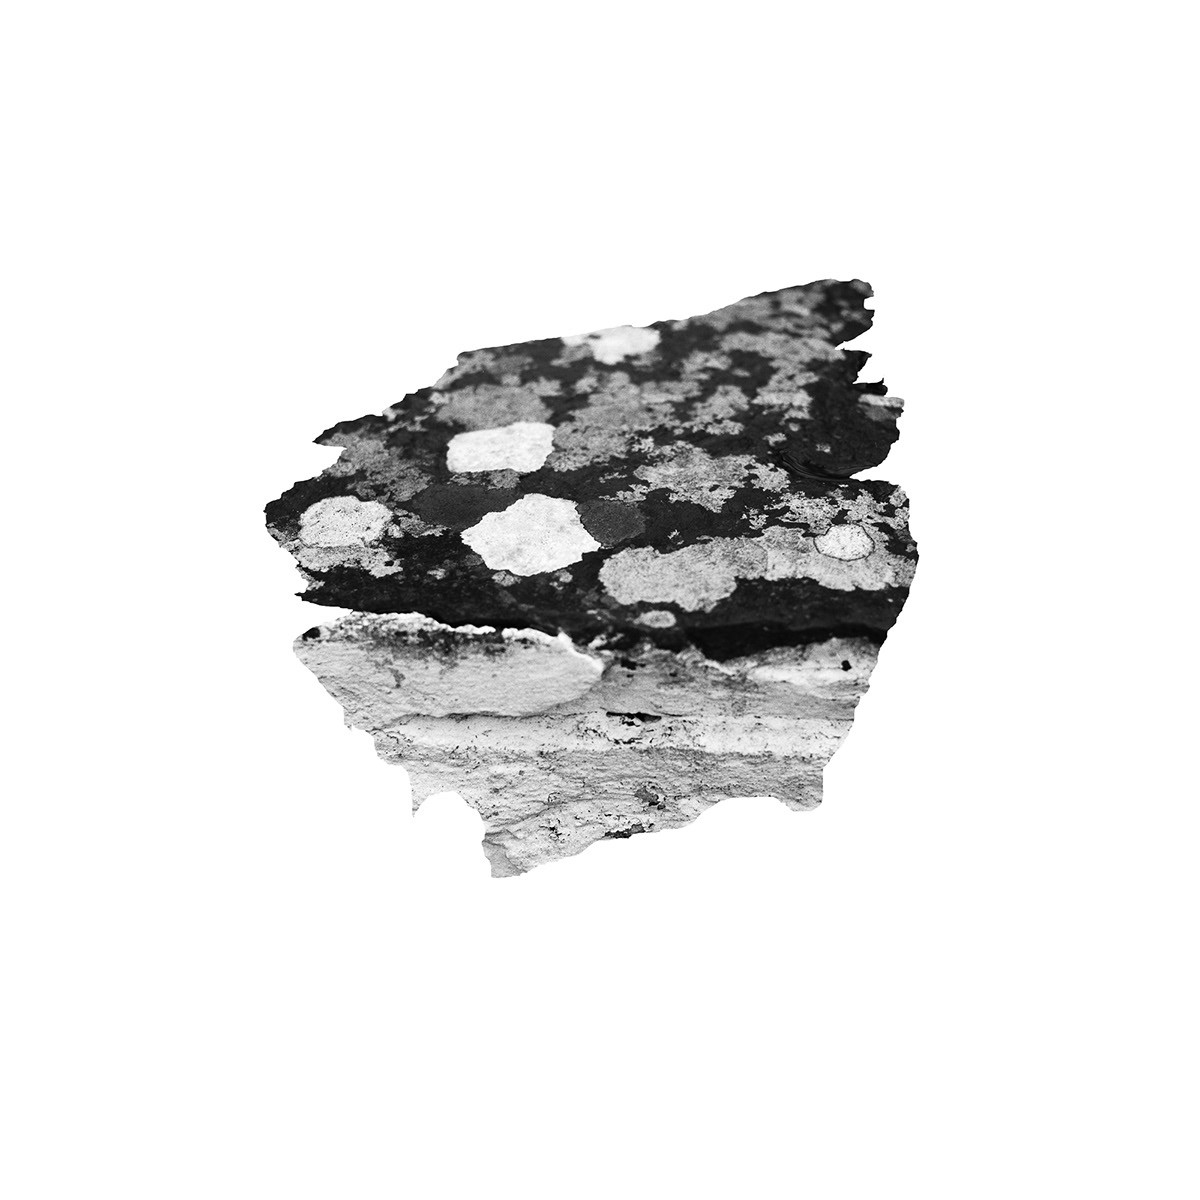 earth stone Landscape Hasselblad film scan